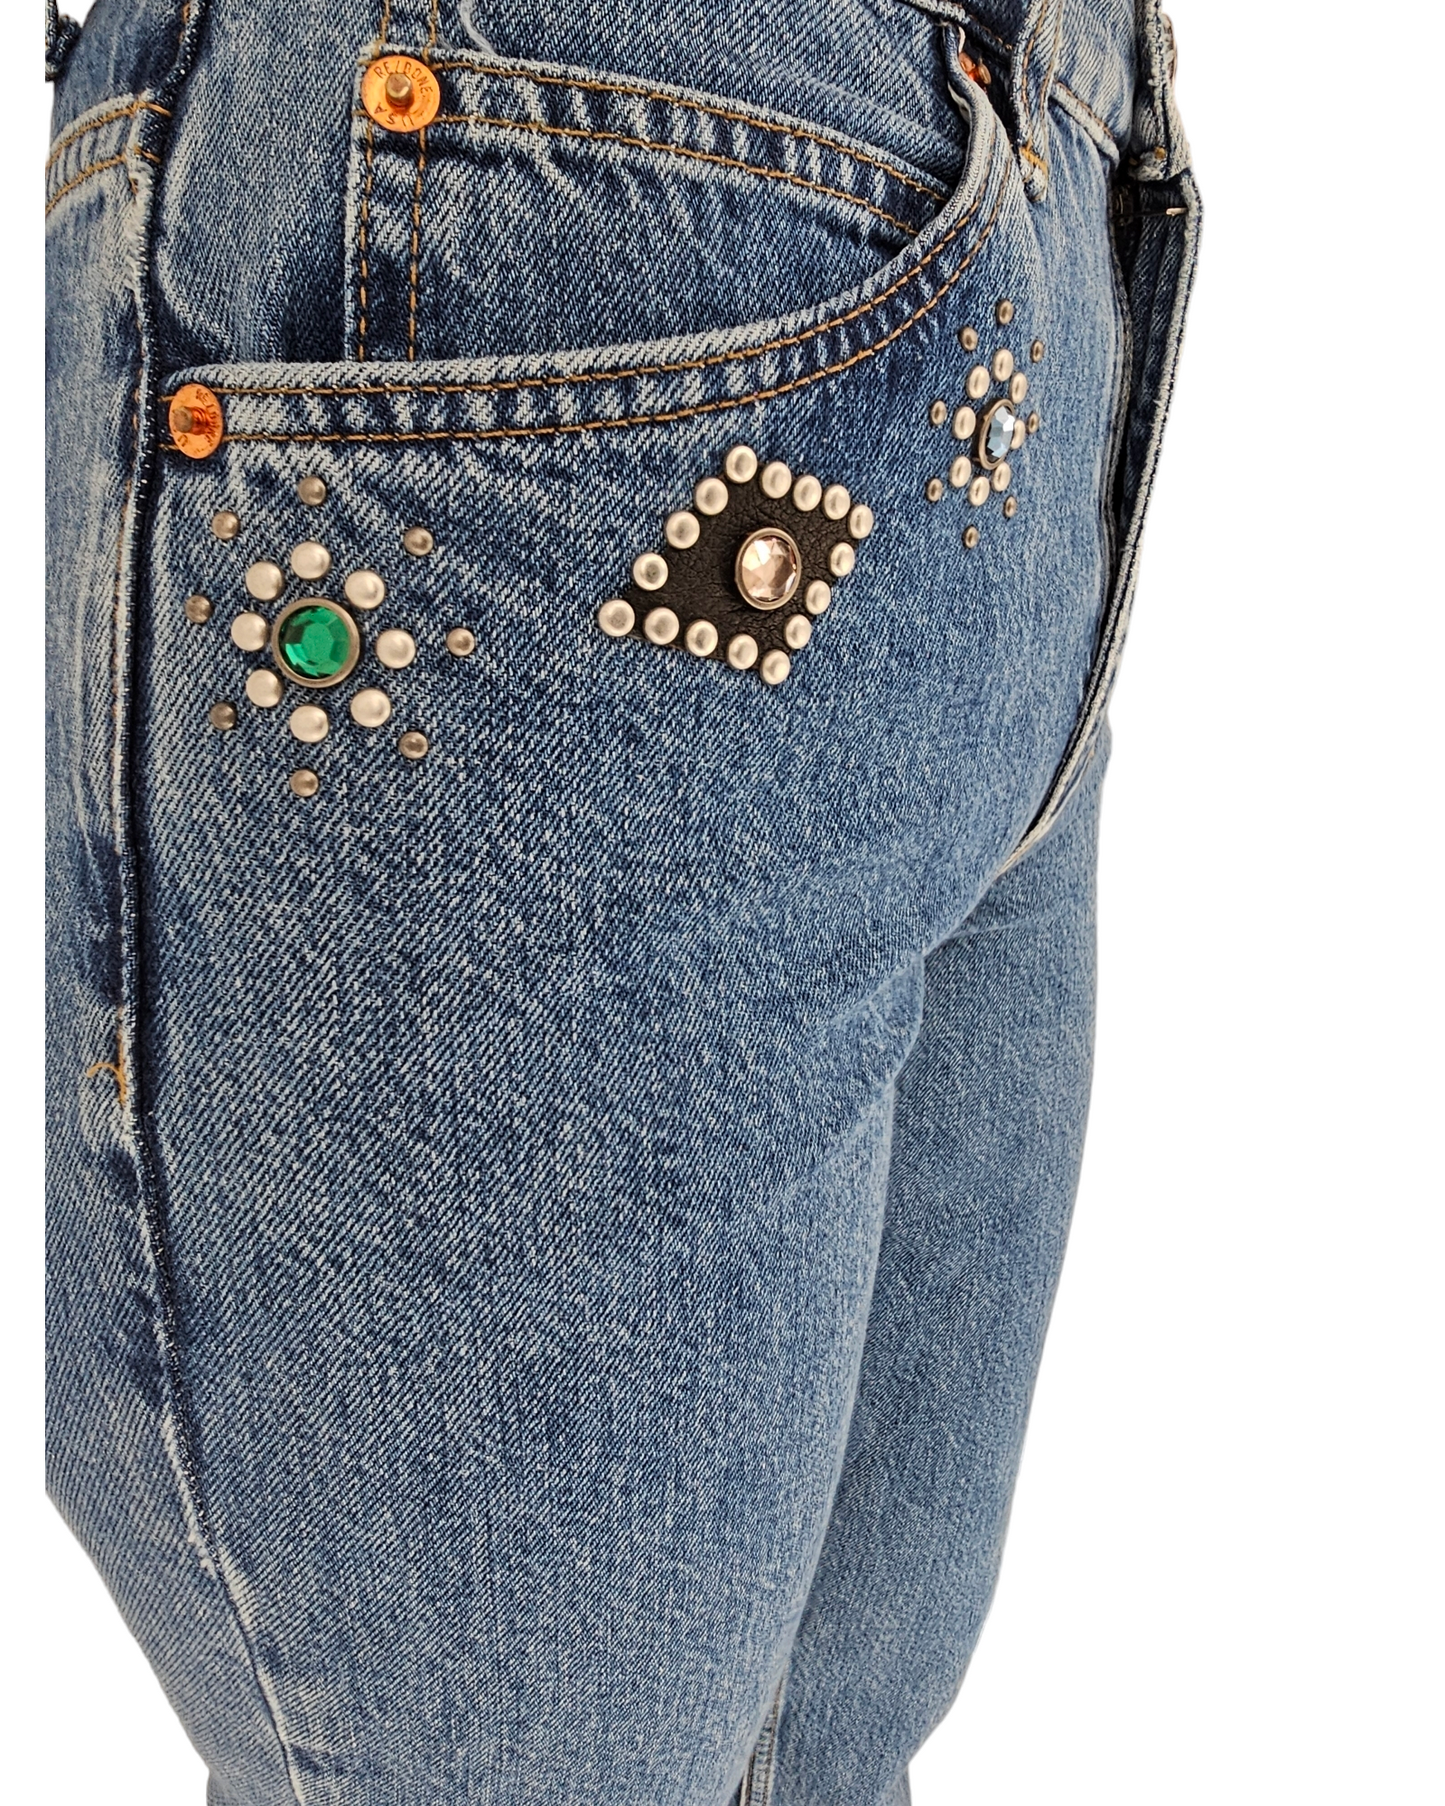 Jeweled stone Indigo jeans